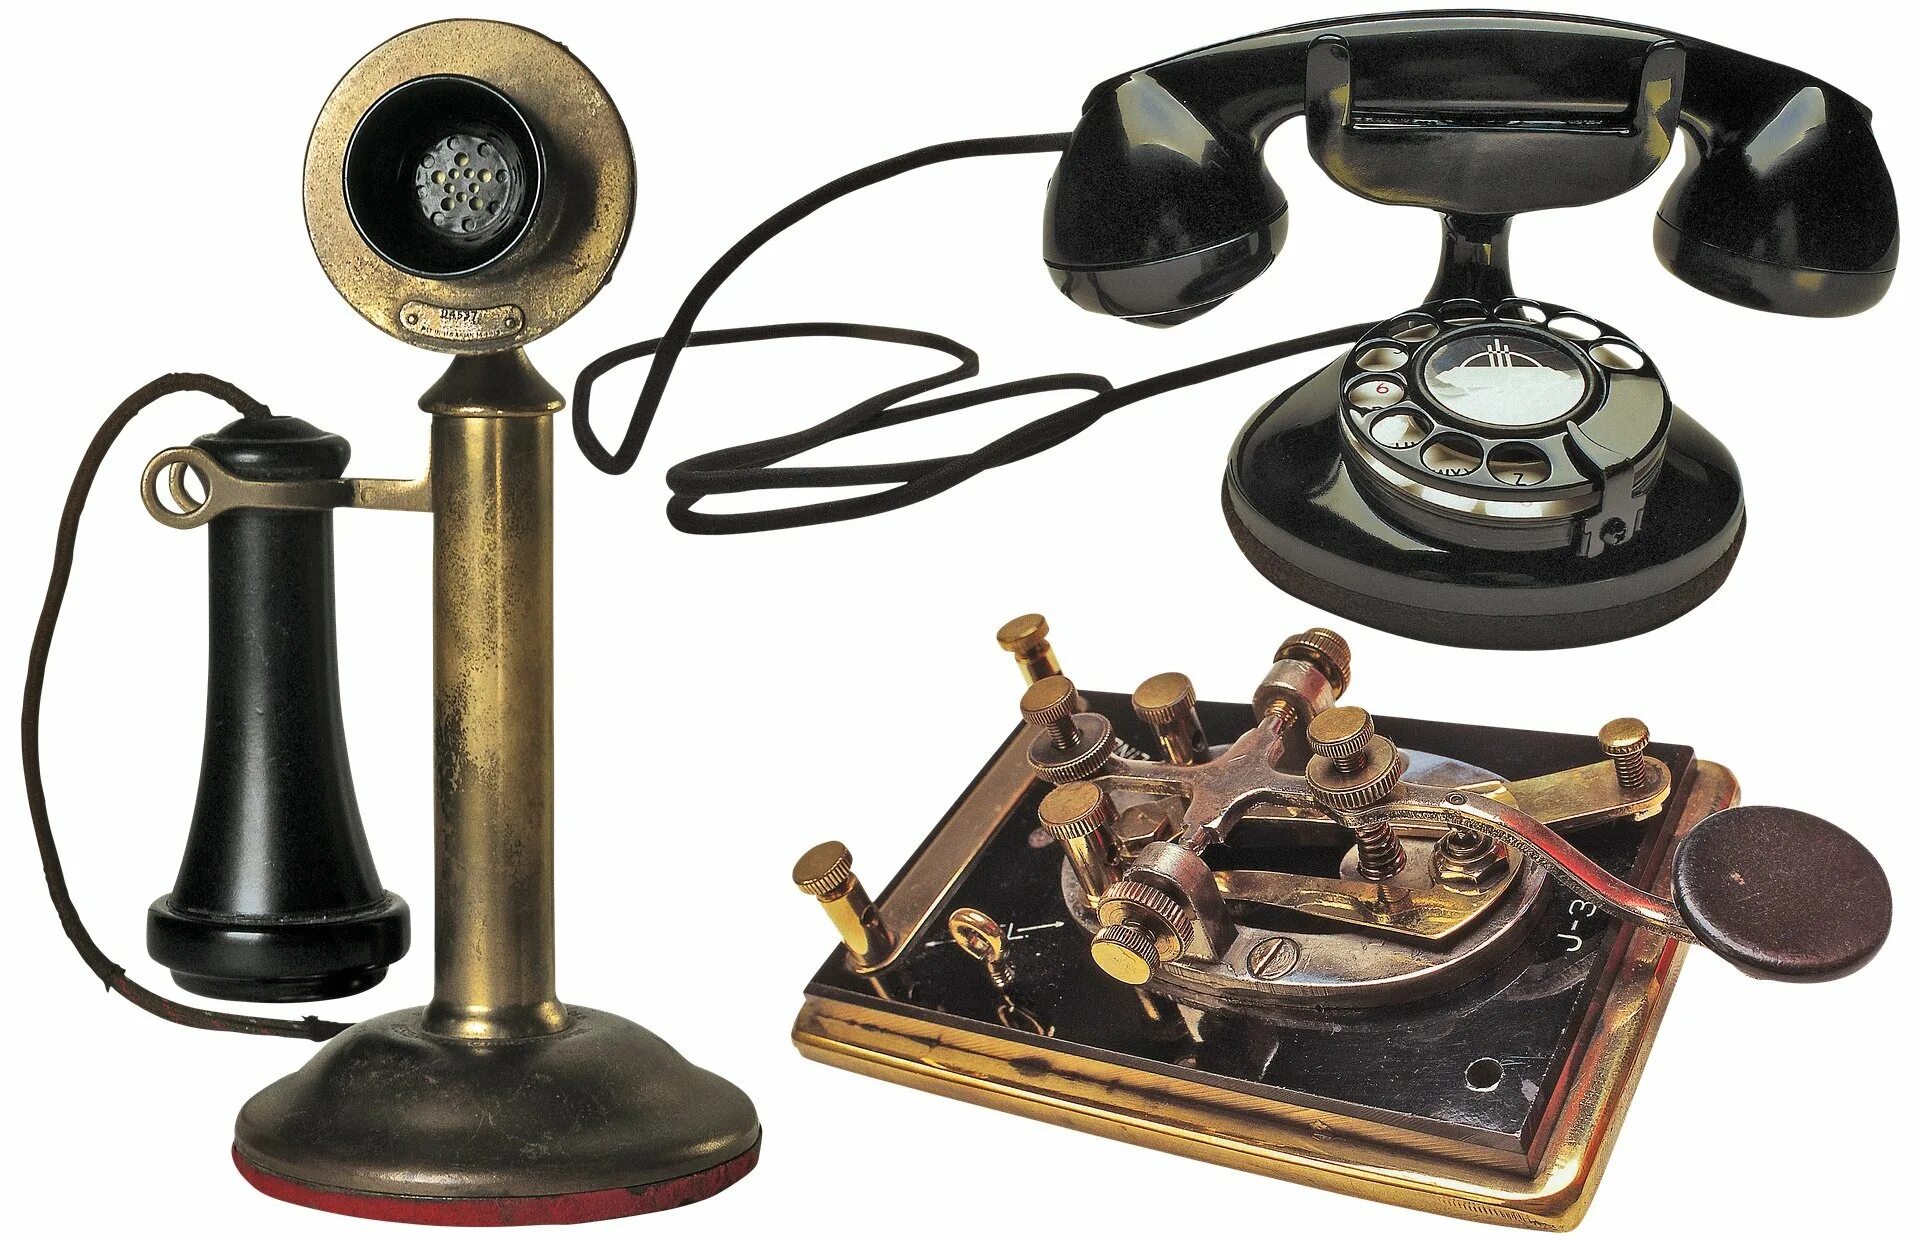 Передача радио по телефону. Первый телефон. Первый телефонный аппарат. Старый телефон. Аналоговый телефонный аппарат.